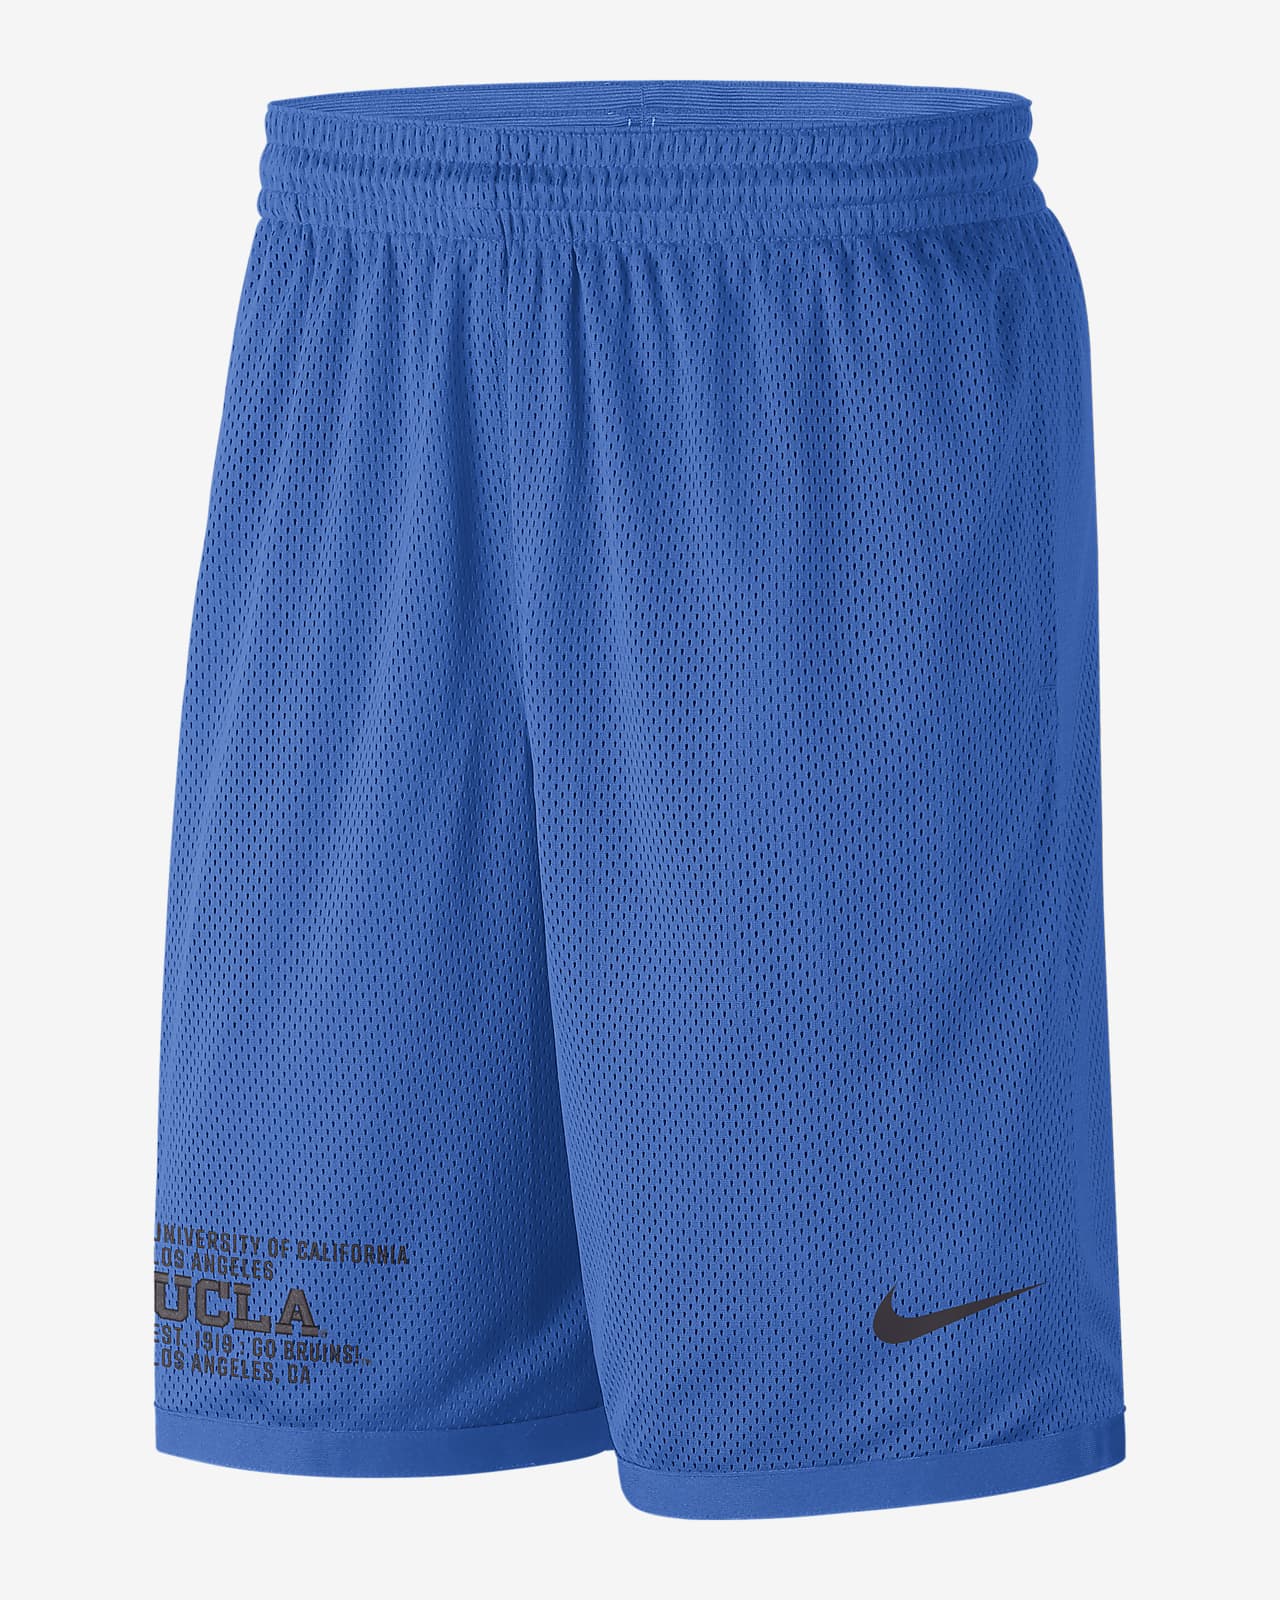 Nike College Dri-FIT (UCLA) Men's Shorts. Nike.com